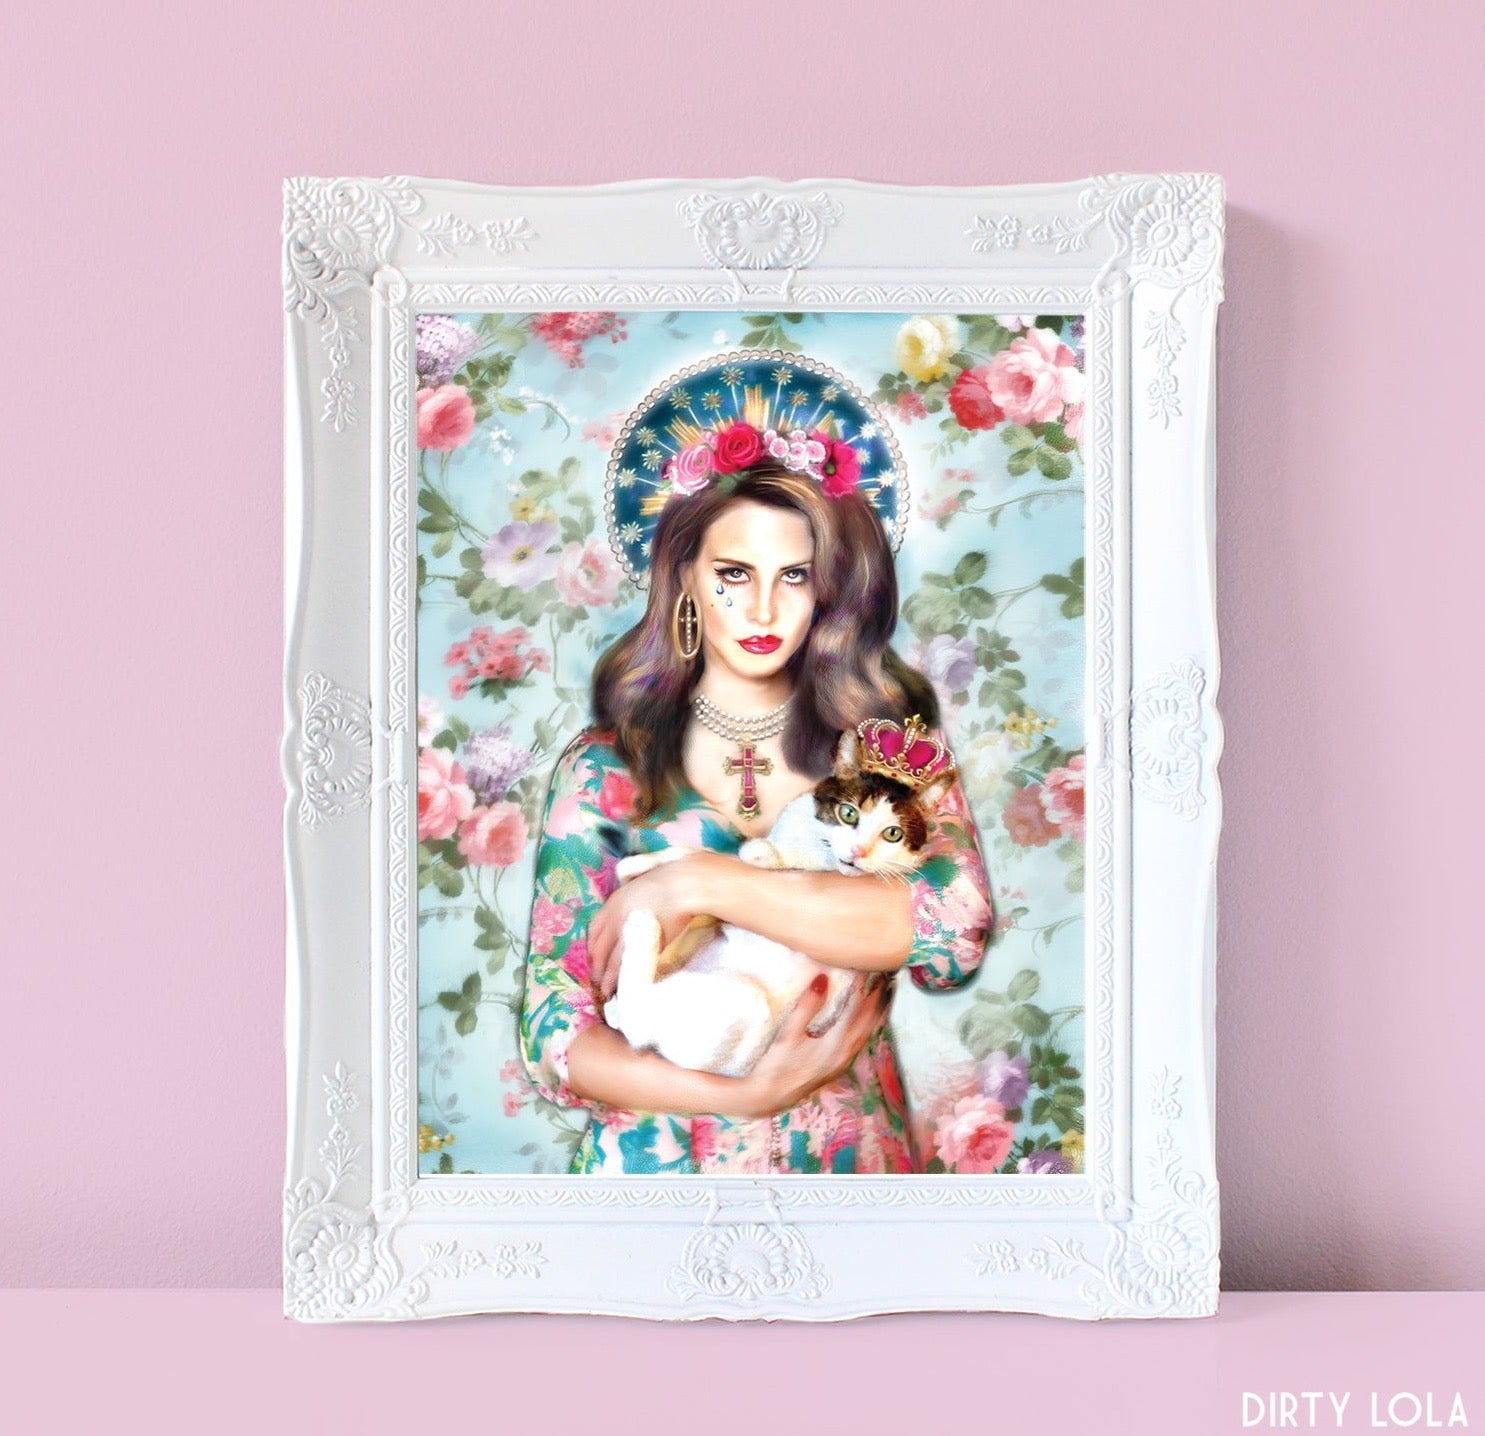 Our Lady Del Rey Art Print